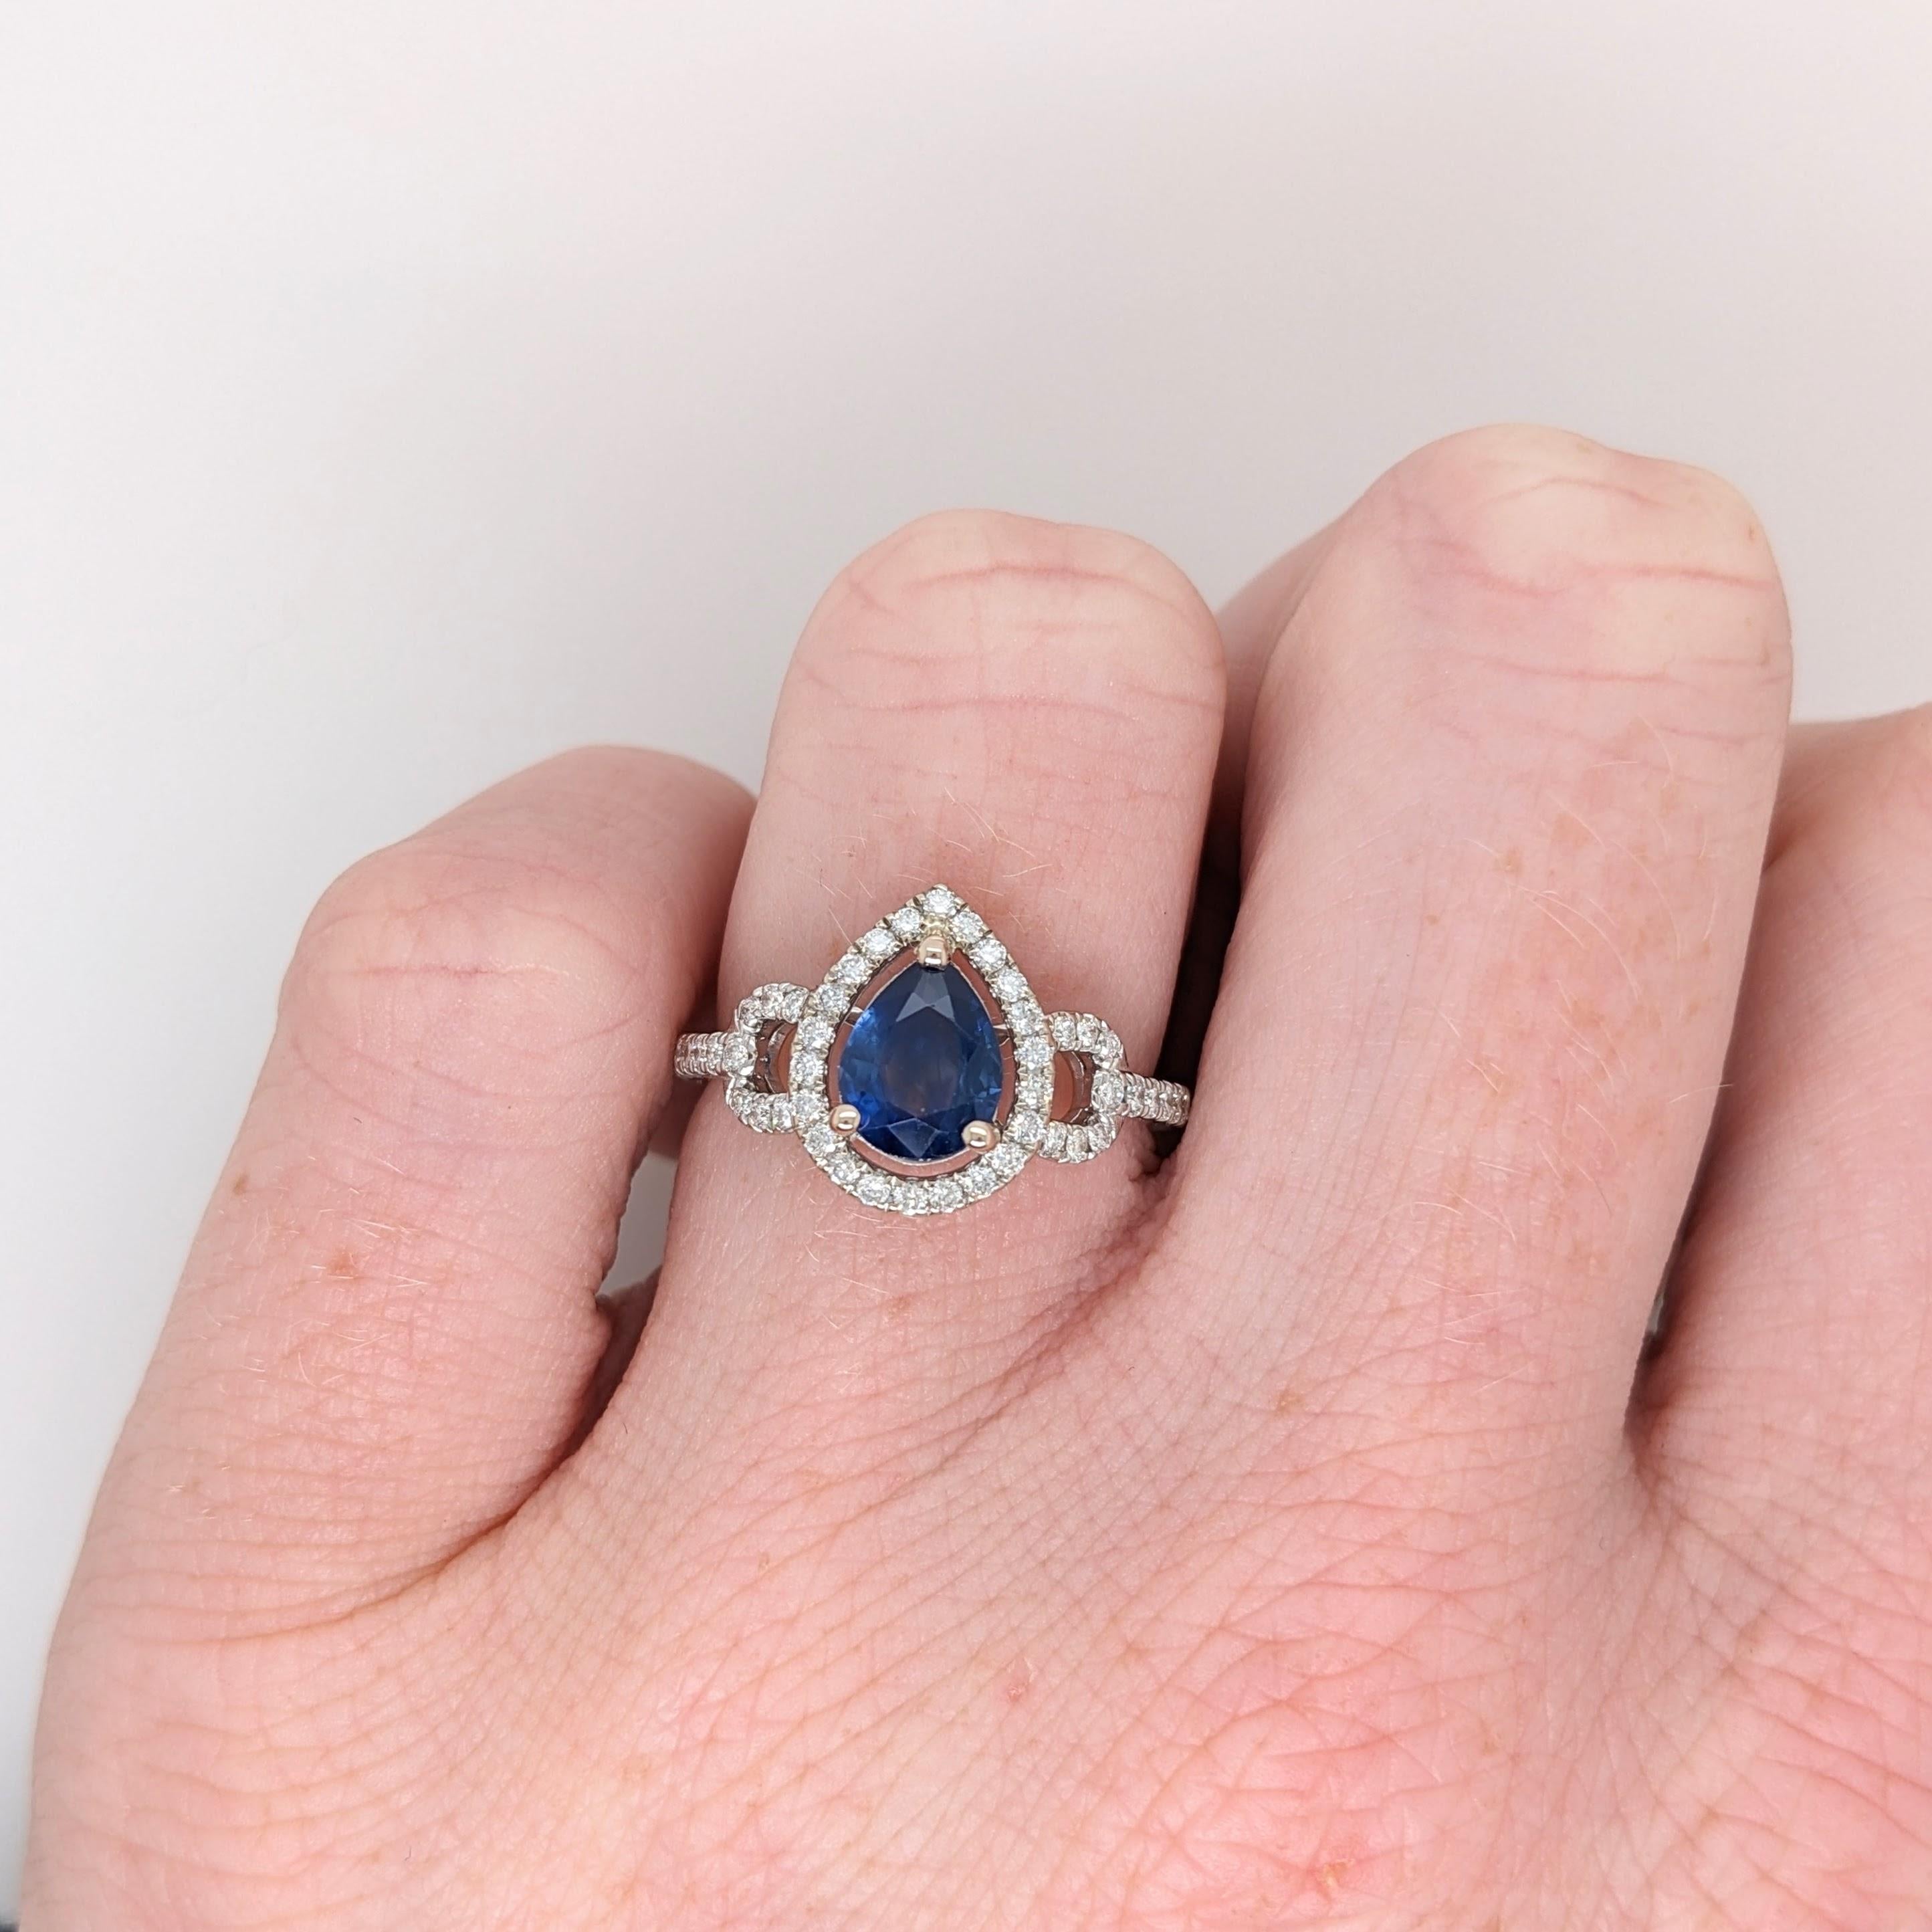 Women's 1.14ct Ceylon Sapphire Ring w Diamond Halo in Solid 14k White Gold Pear 8x6mm